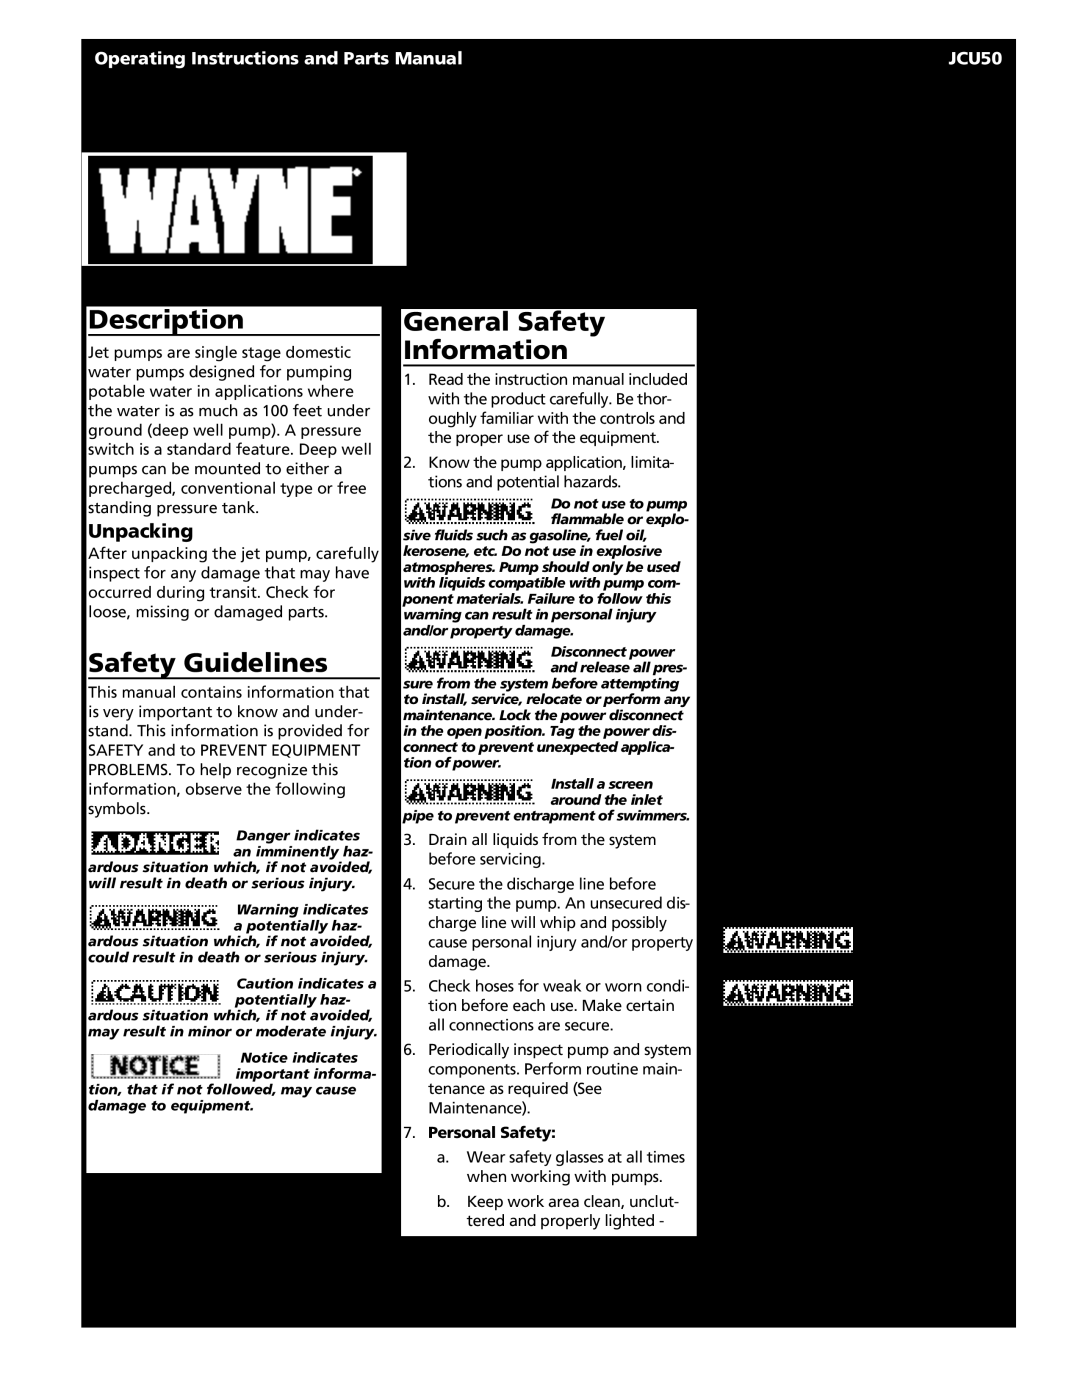 Wayne JCU50 instruction manual Jet Pump Water Systems, Description, Safety Guidelines, General Safety Information 